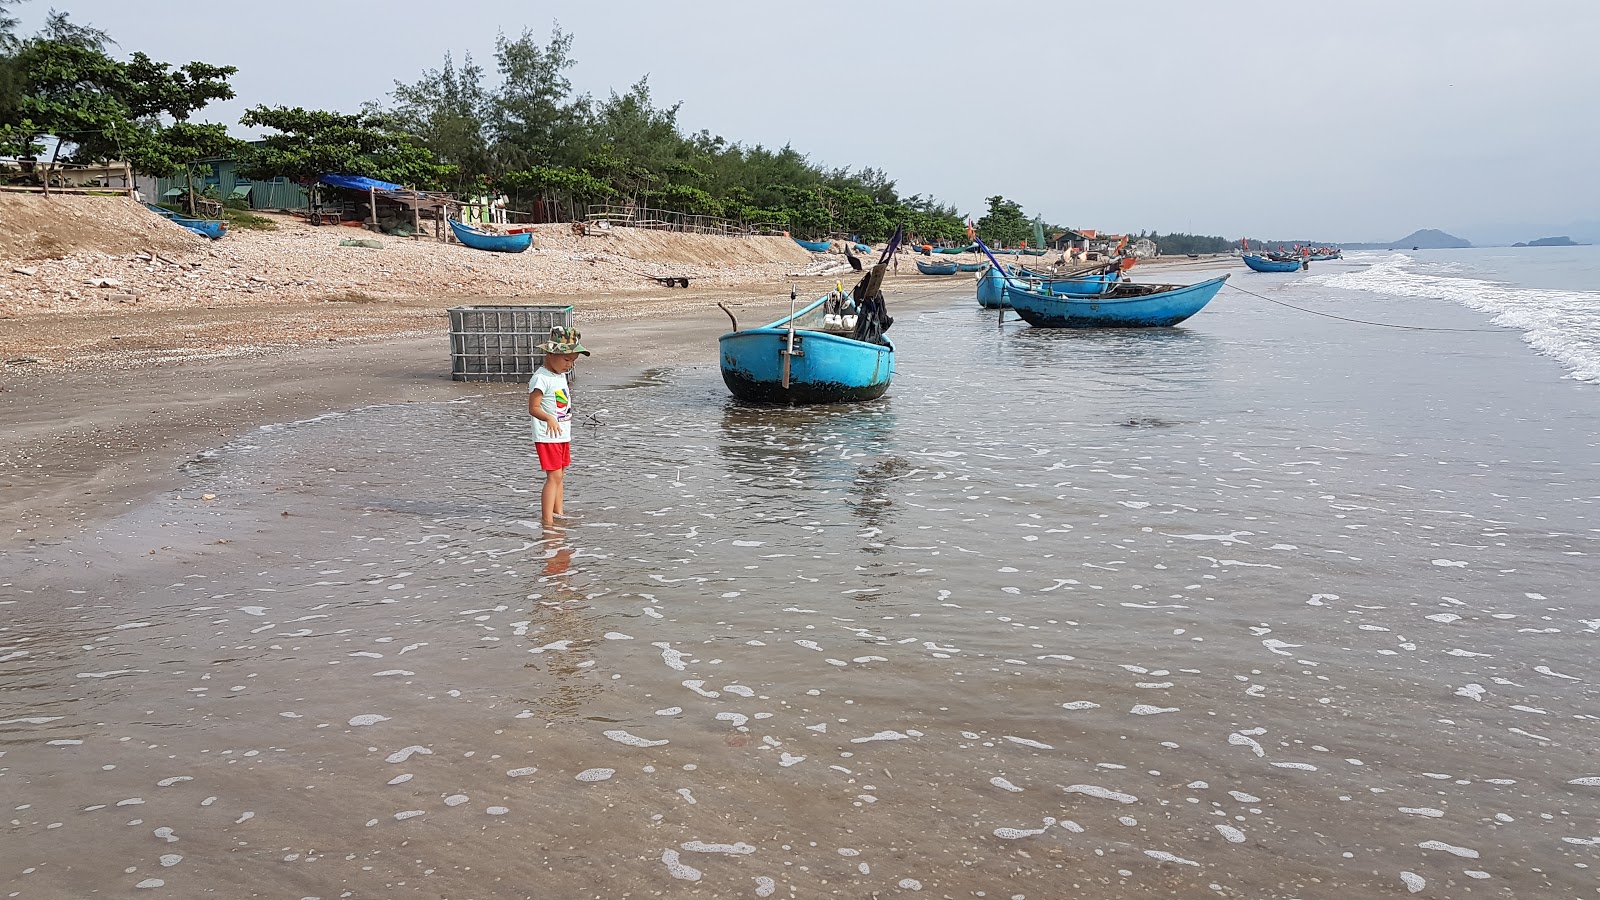 Zdjęcie Quynh Nghia Beach obszar udogodnień